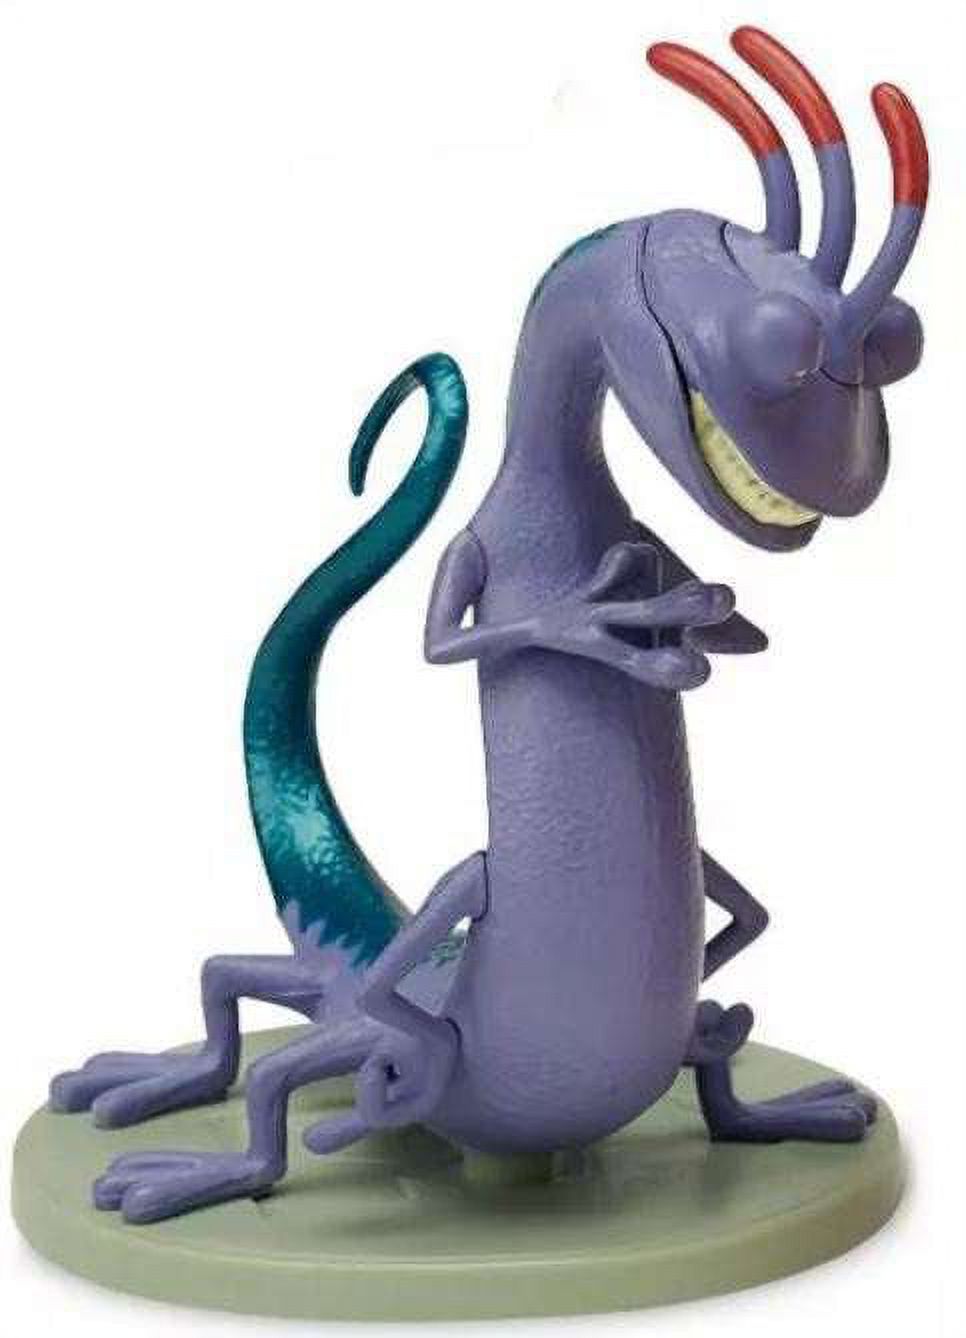 Disney / Pixar Monsters Inc Randall Boggs PVC Figure (No Packaging) - image 1 of 1